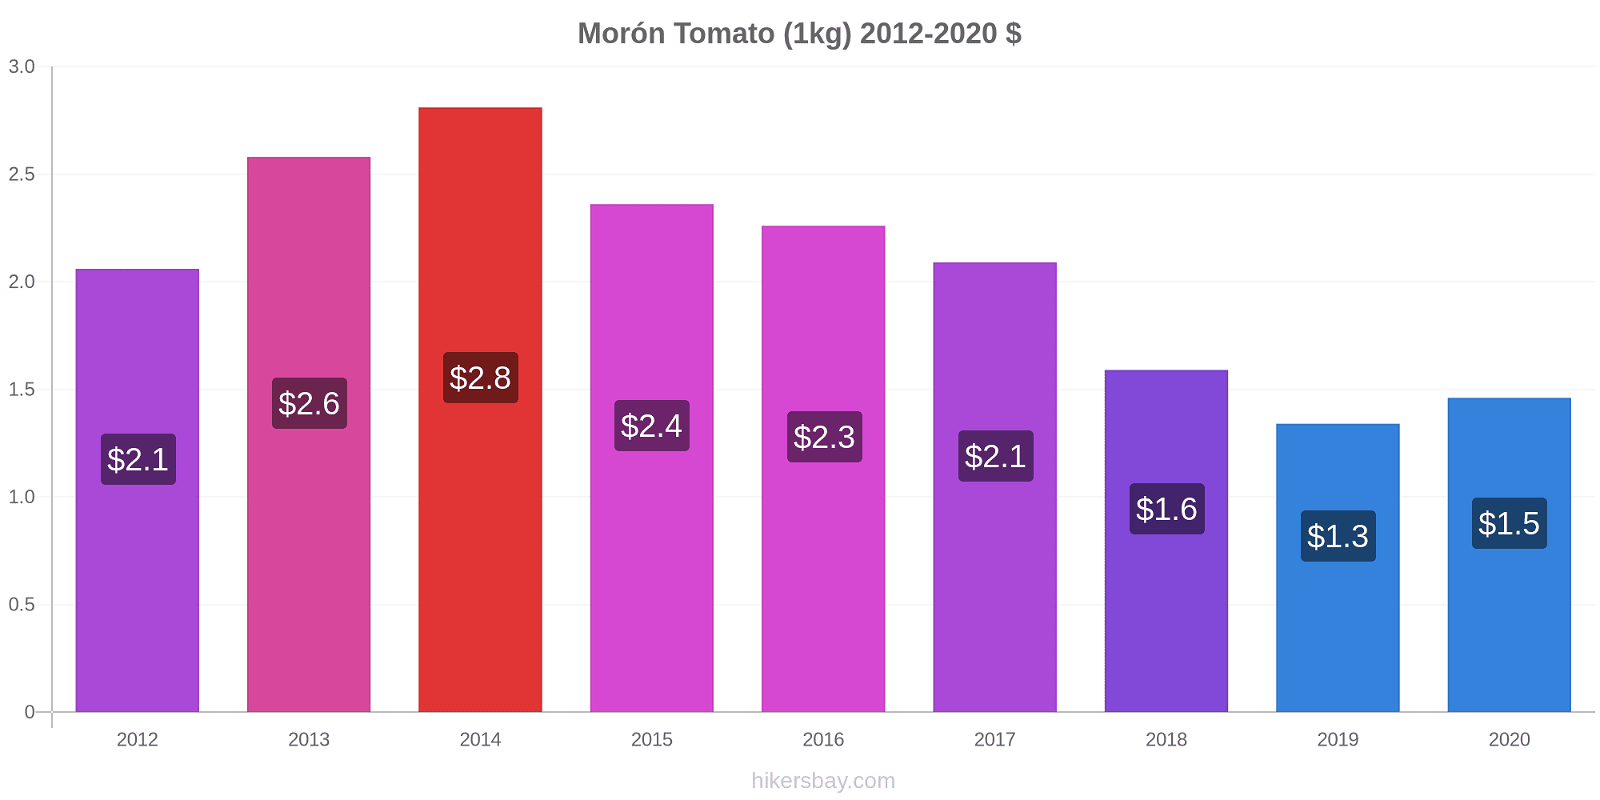 Morón price changes Tomato (1kg) hikersbay.com